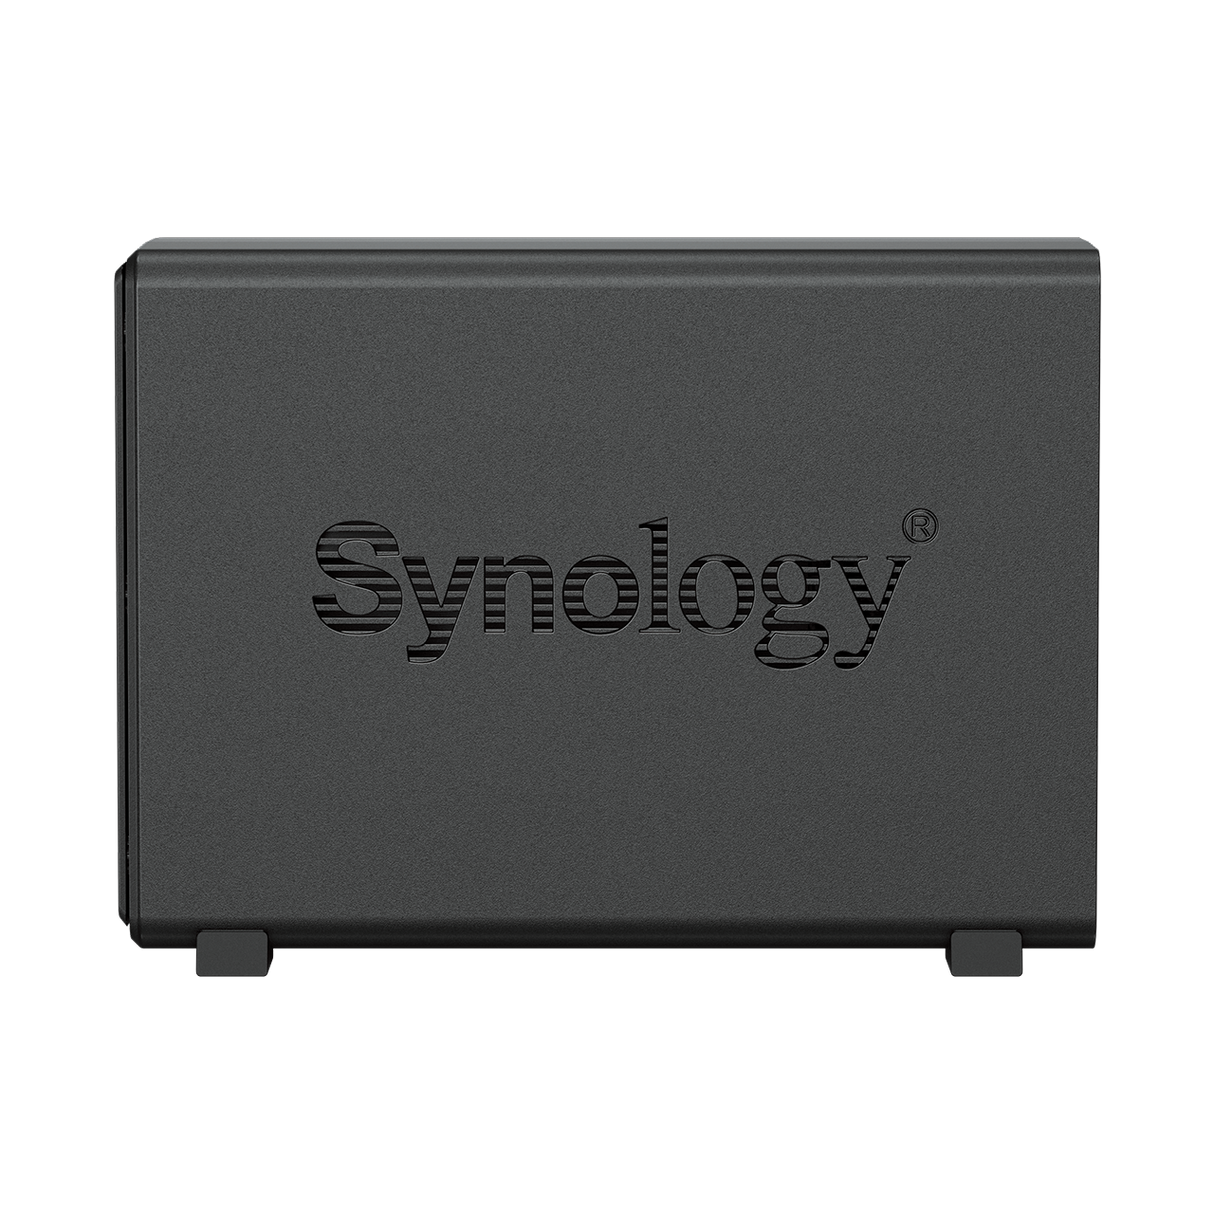 Synology 1-bay DiskStation DS124 (Diskless)